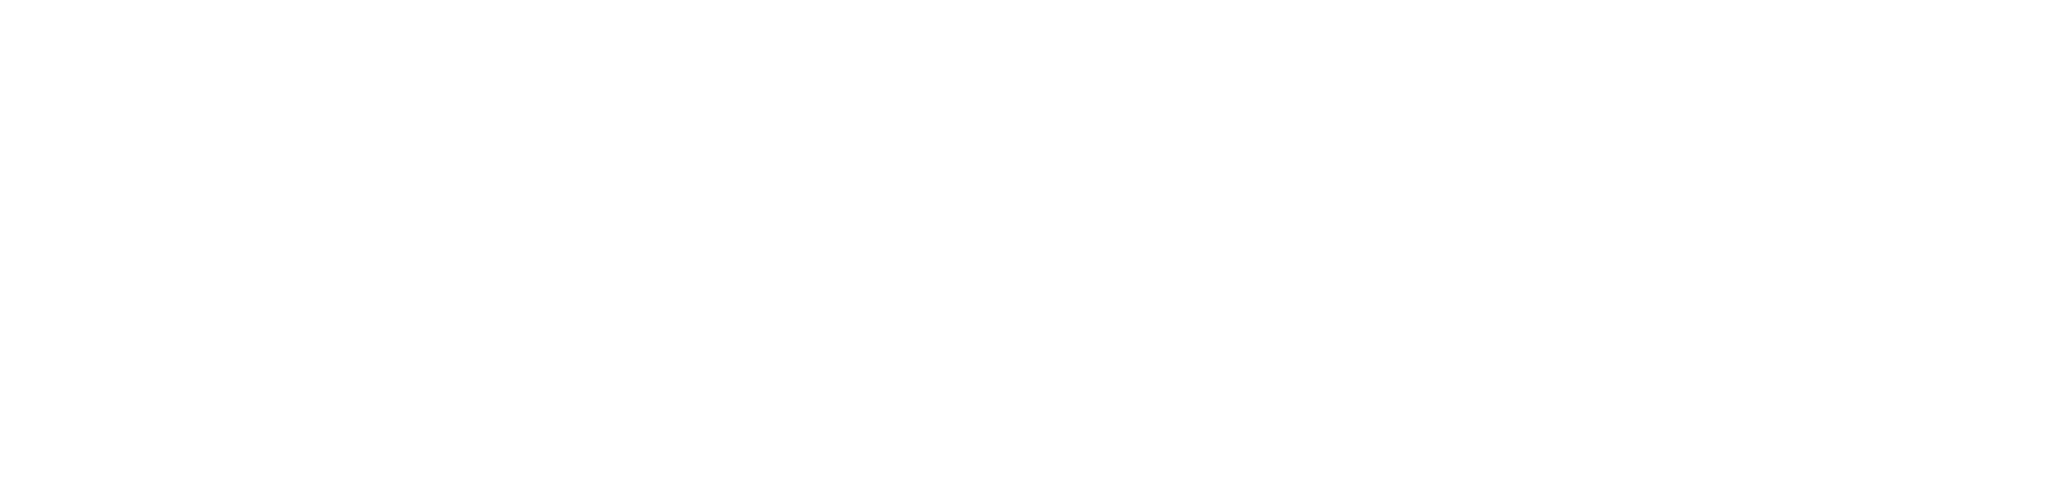 Ubersoft Bedding